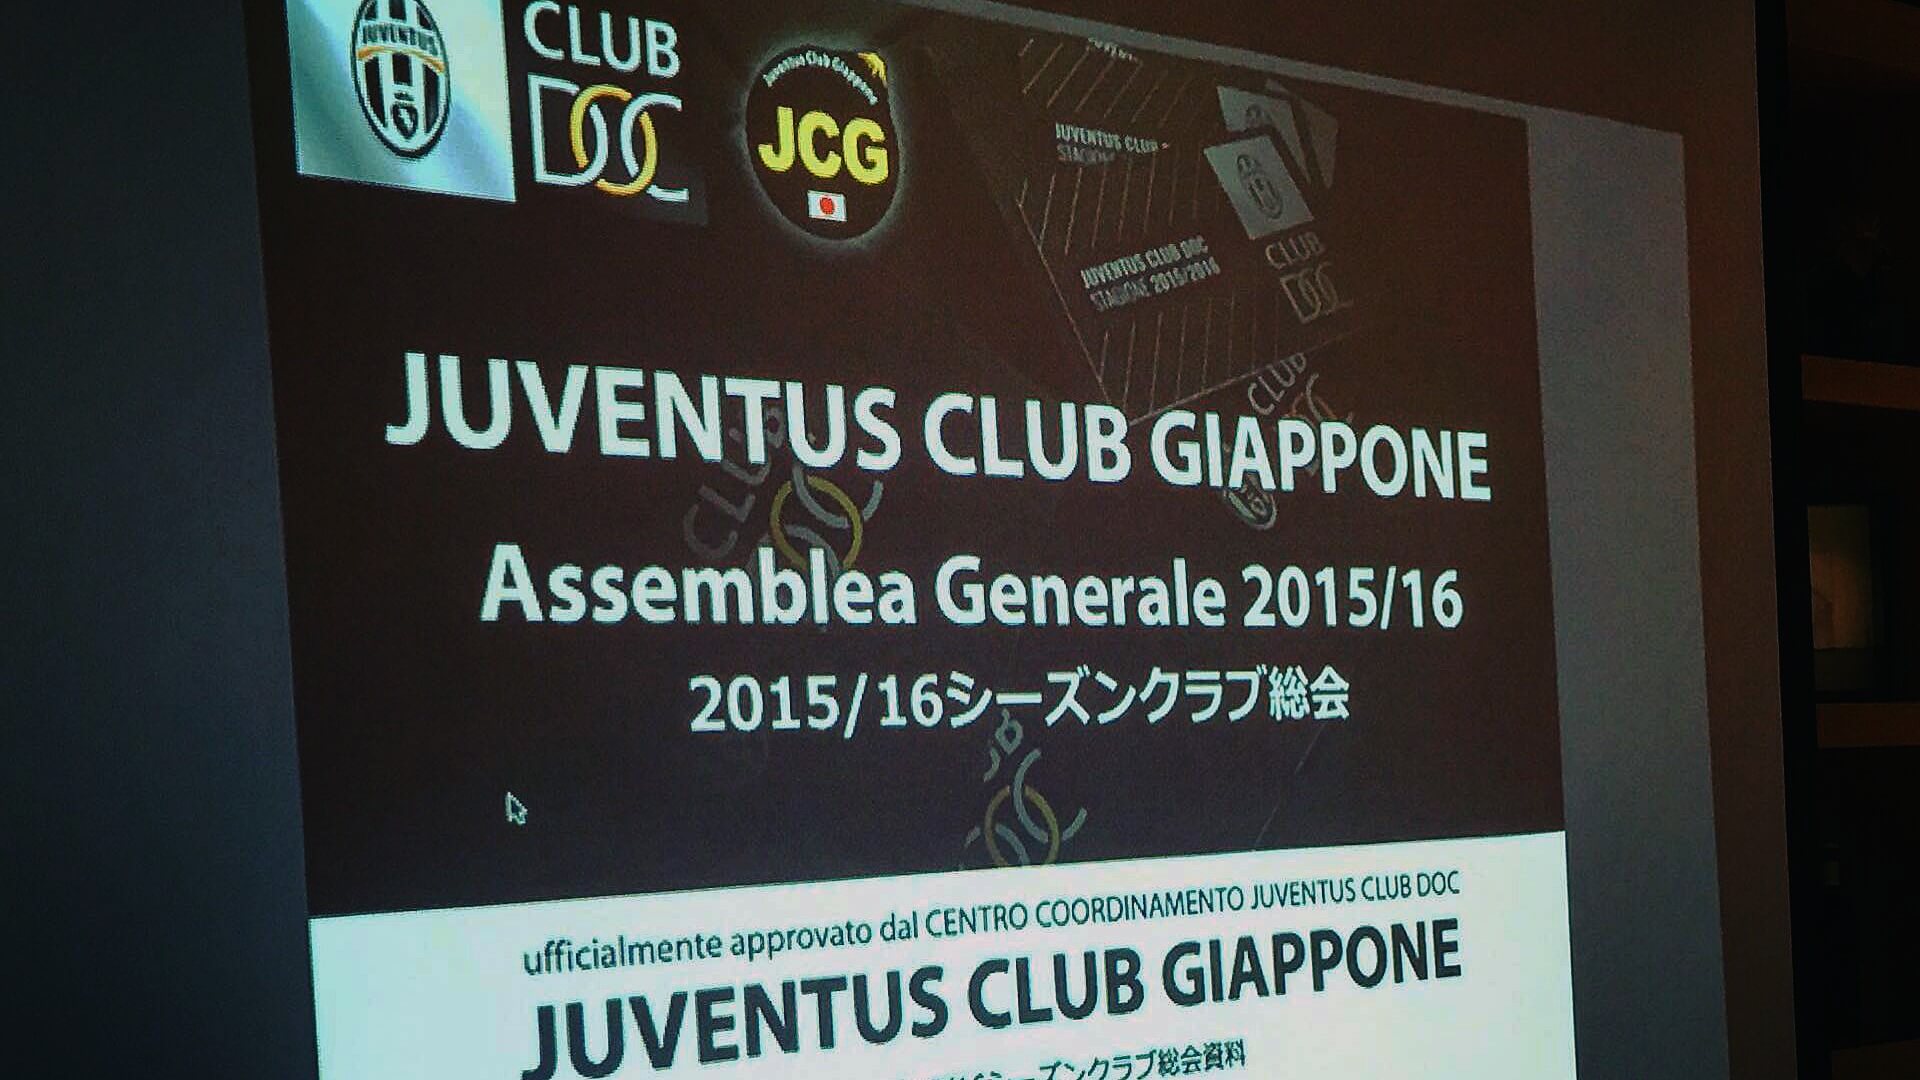 JUVENTUS CLUB GIAPPONE 2015/16 annual meeting